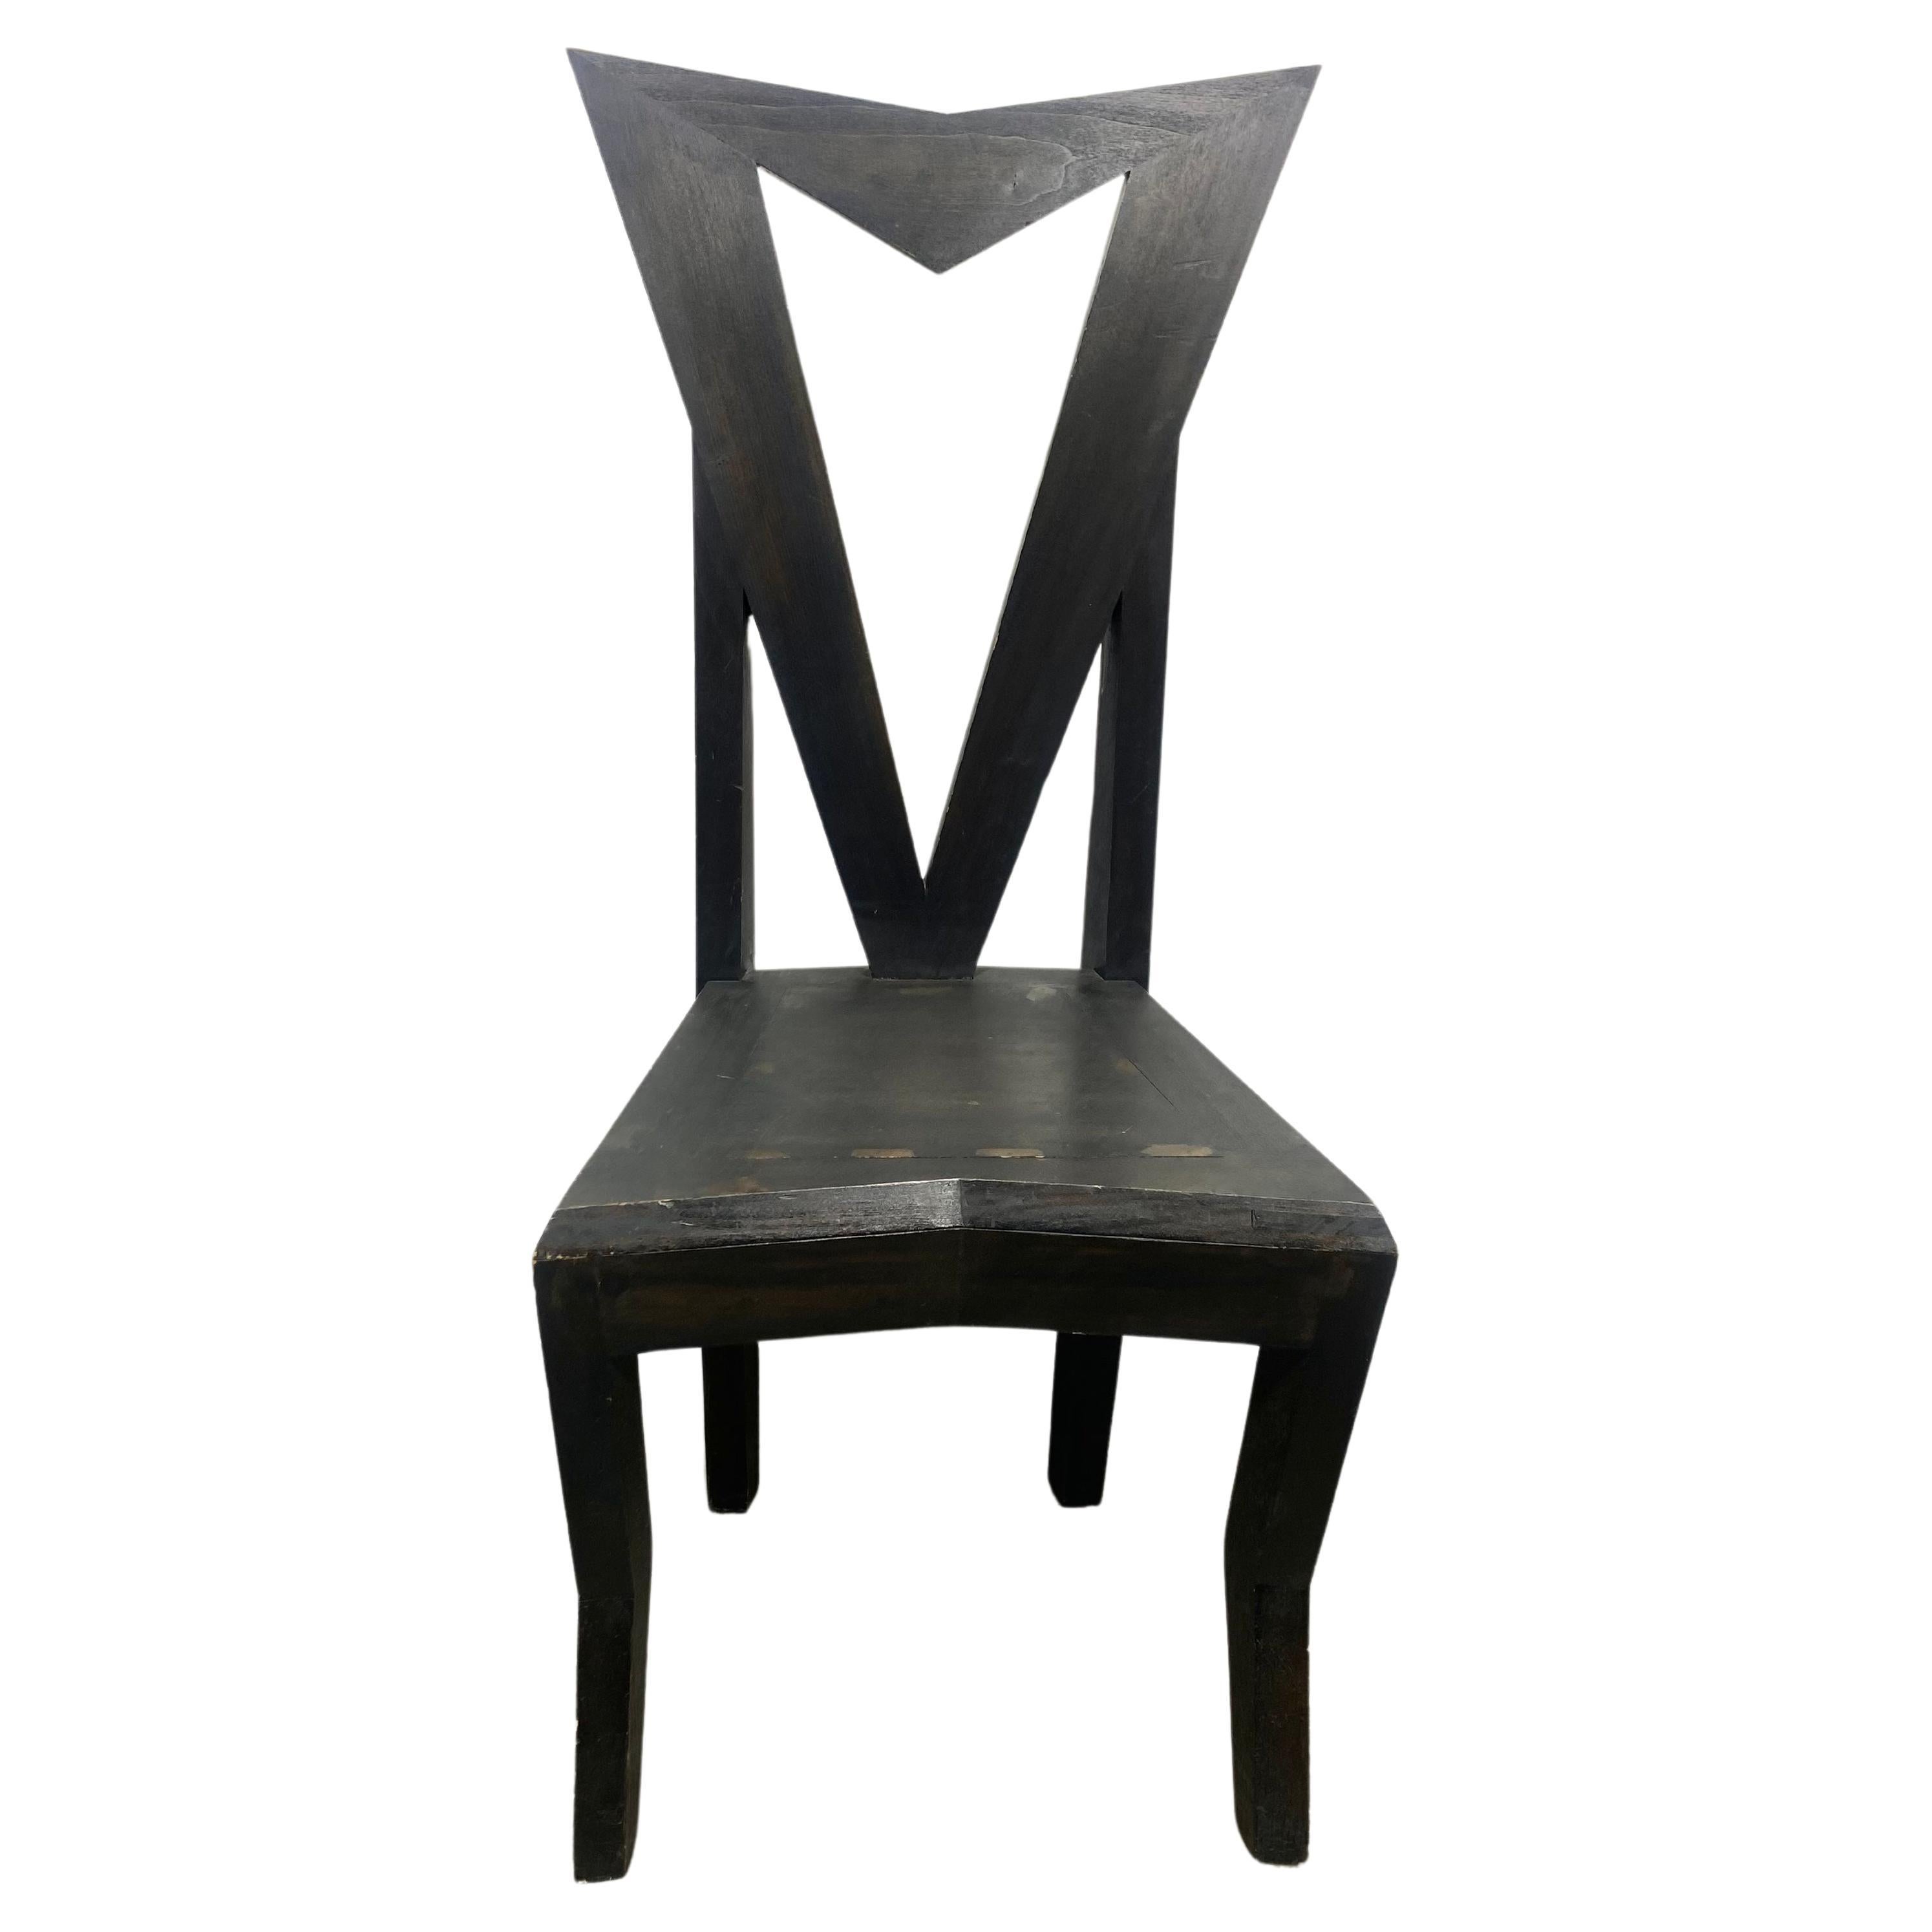 Czech Cubist Side Chair design by Pavel Janak for Modernista